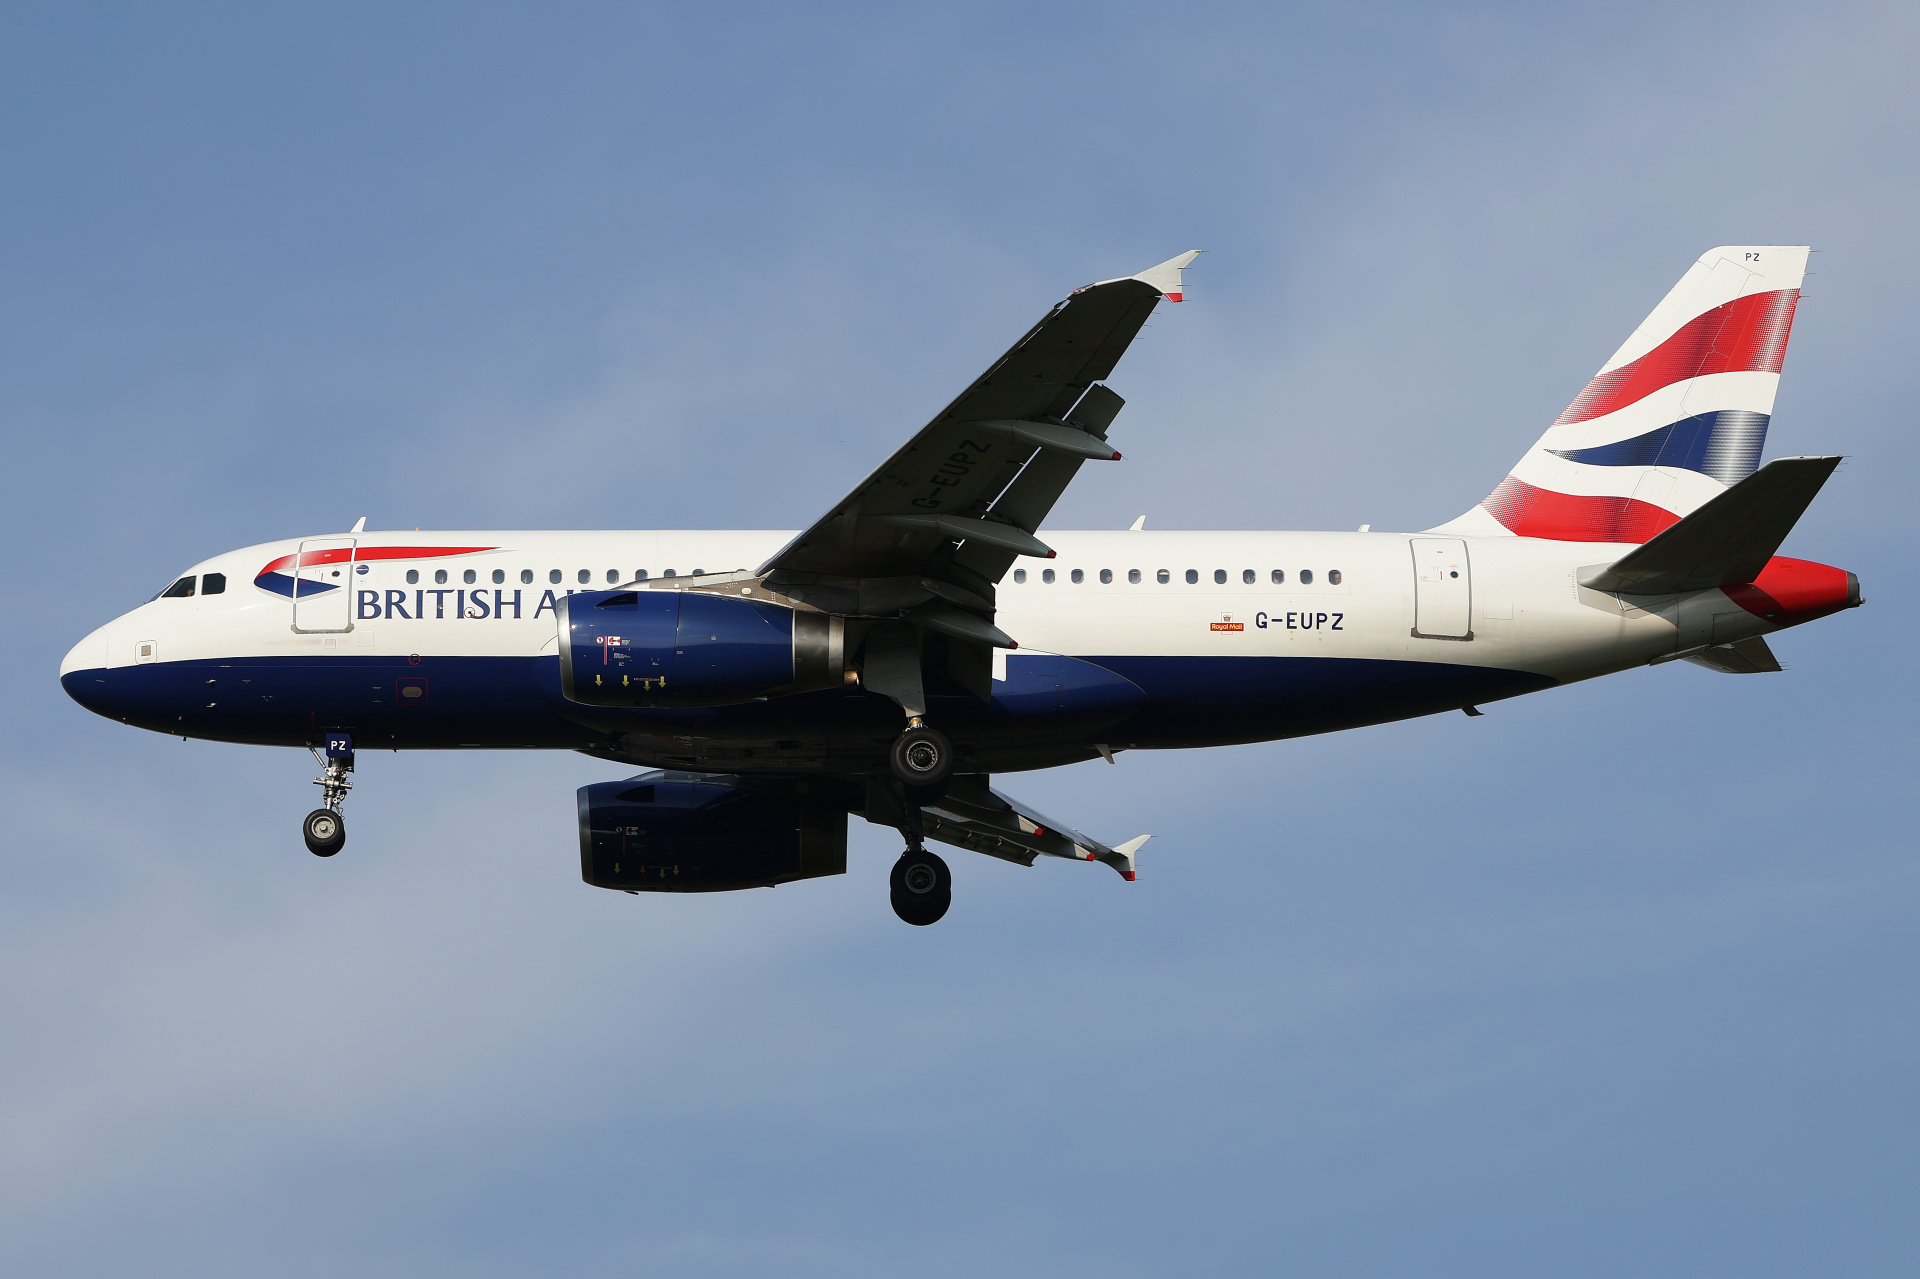 G-EUPZ (Aircraft » EPWA Spotting » Airbus A319-100 » British Airways)